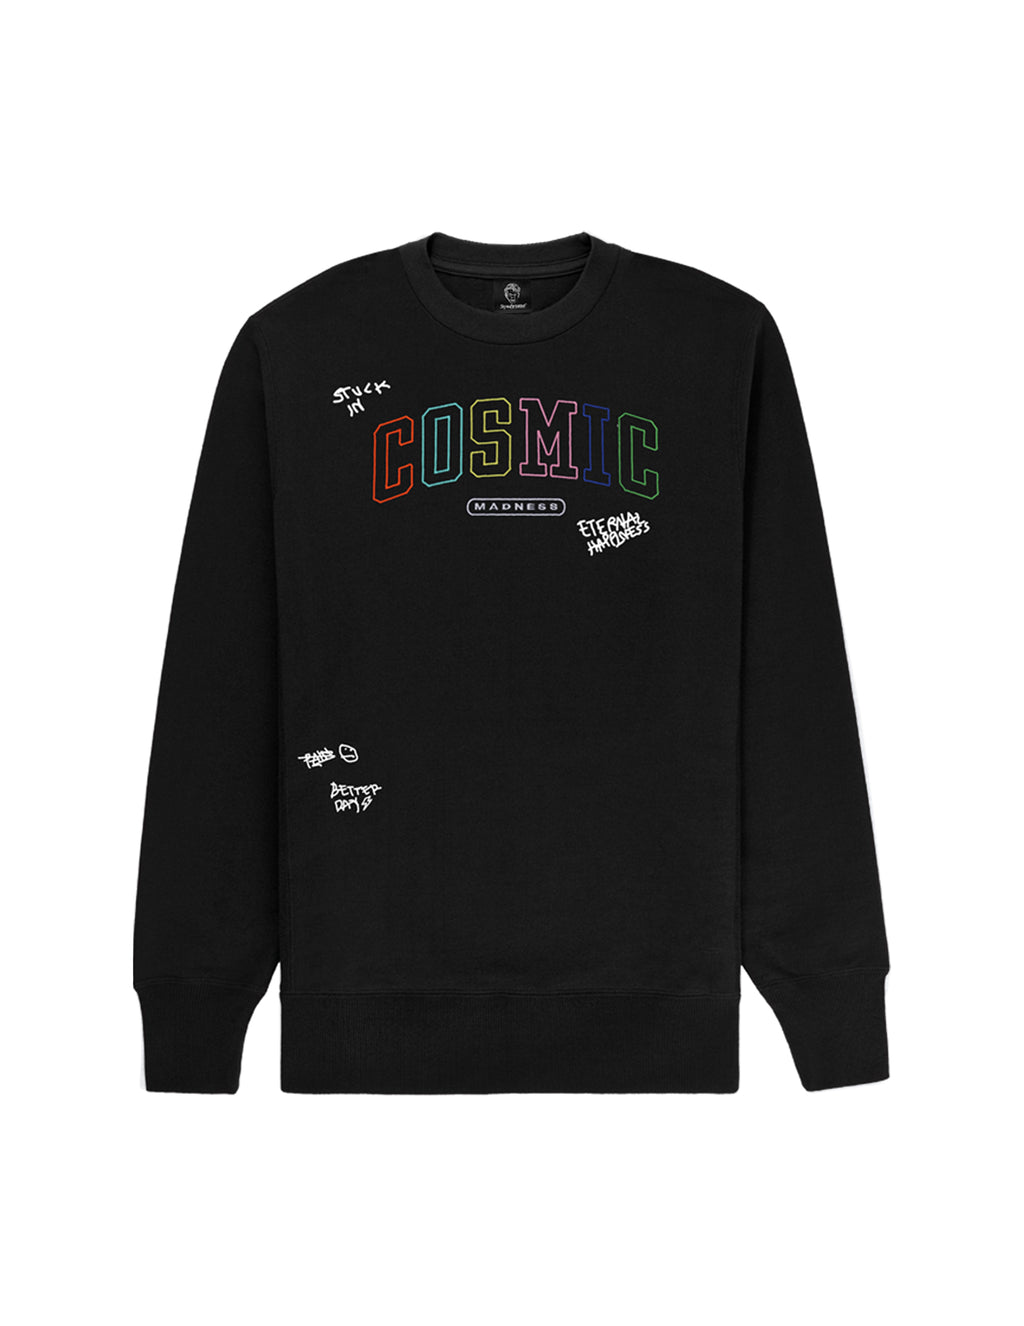 Cosmic Madness Sweater – Black